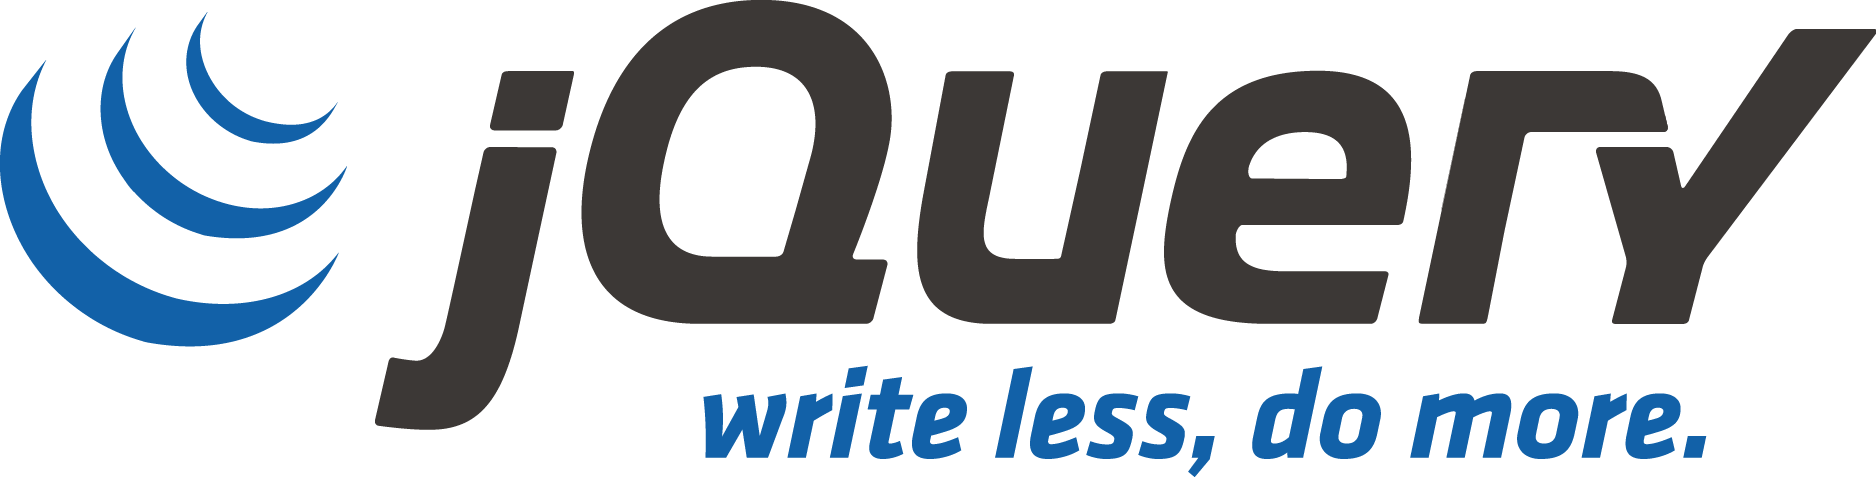 jQuery Logo png